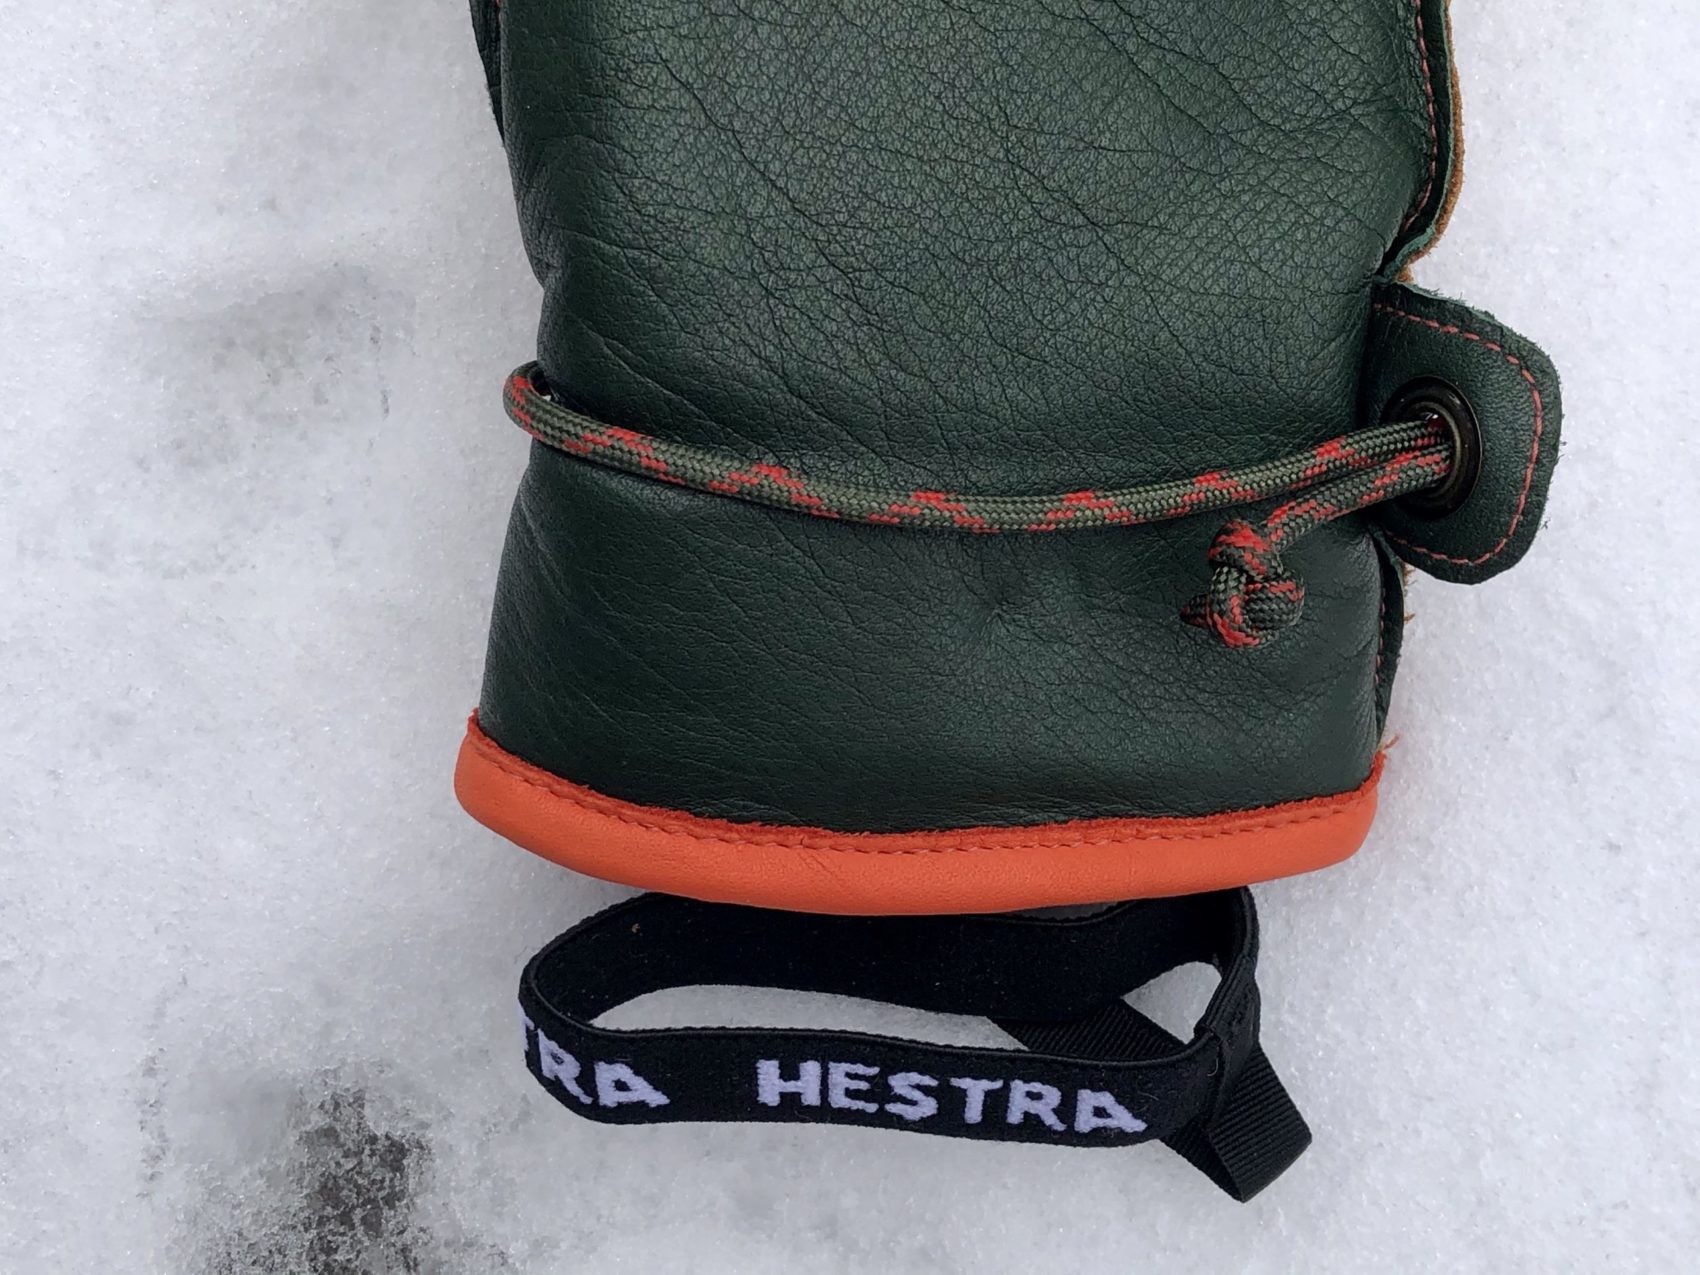 Hestra Wakayama mitten hand strap cuff paracord